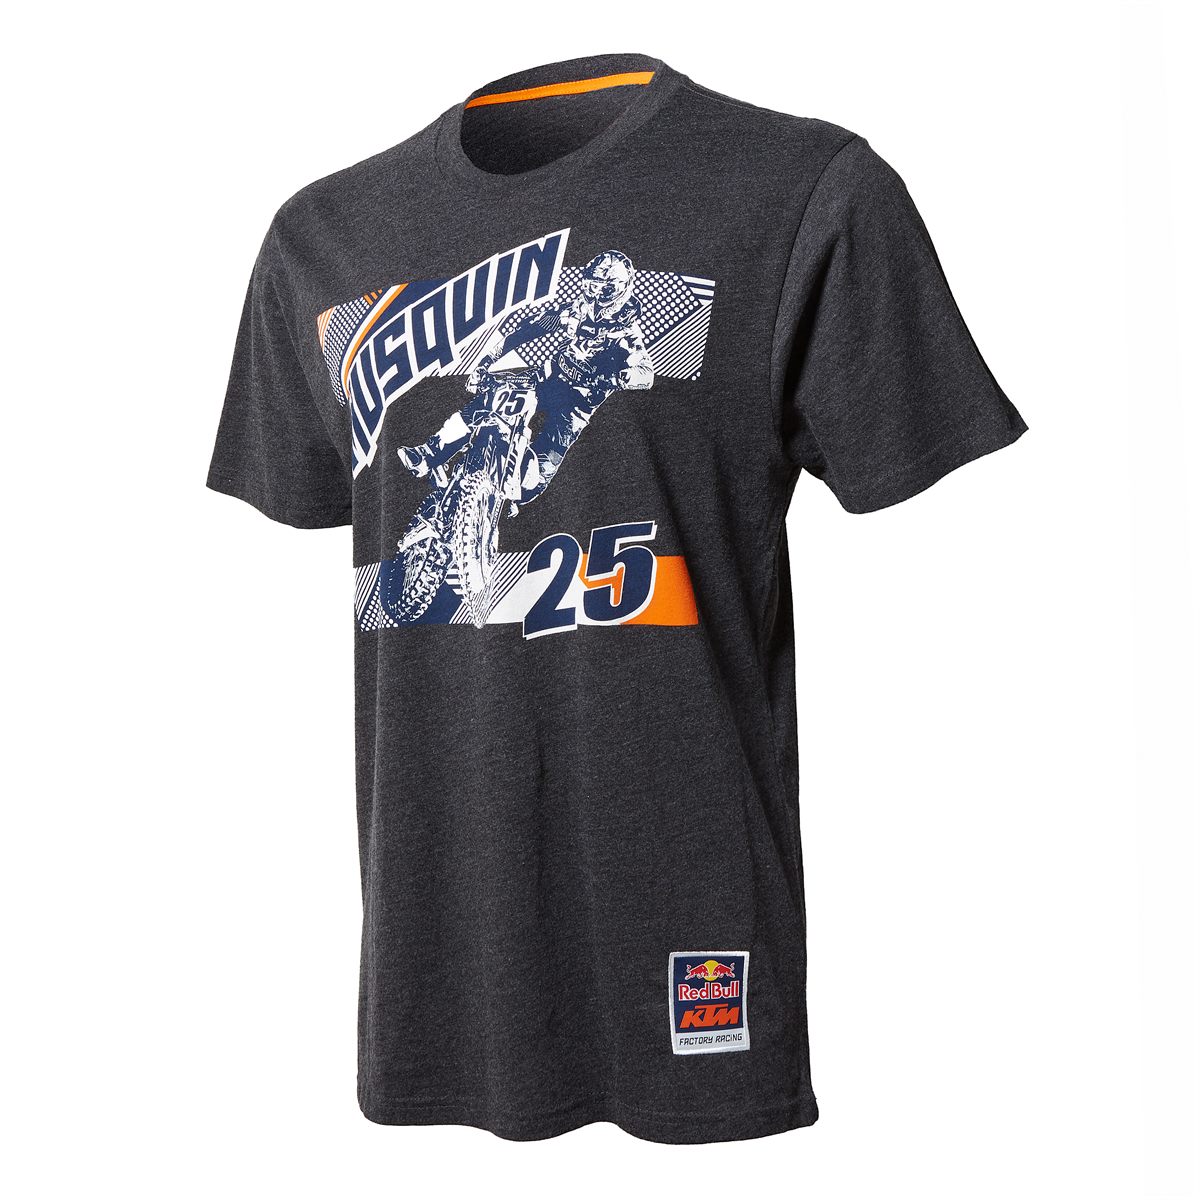 Red Bull KTM Racing Team Emblem T-Shirt grey - From Austria Online Shop